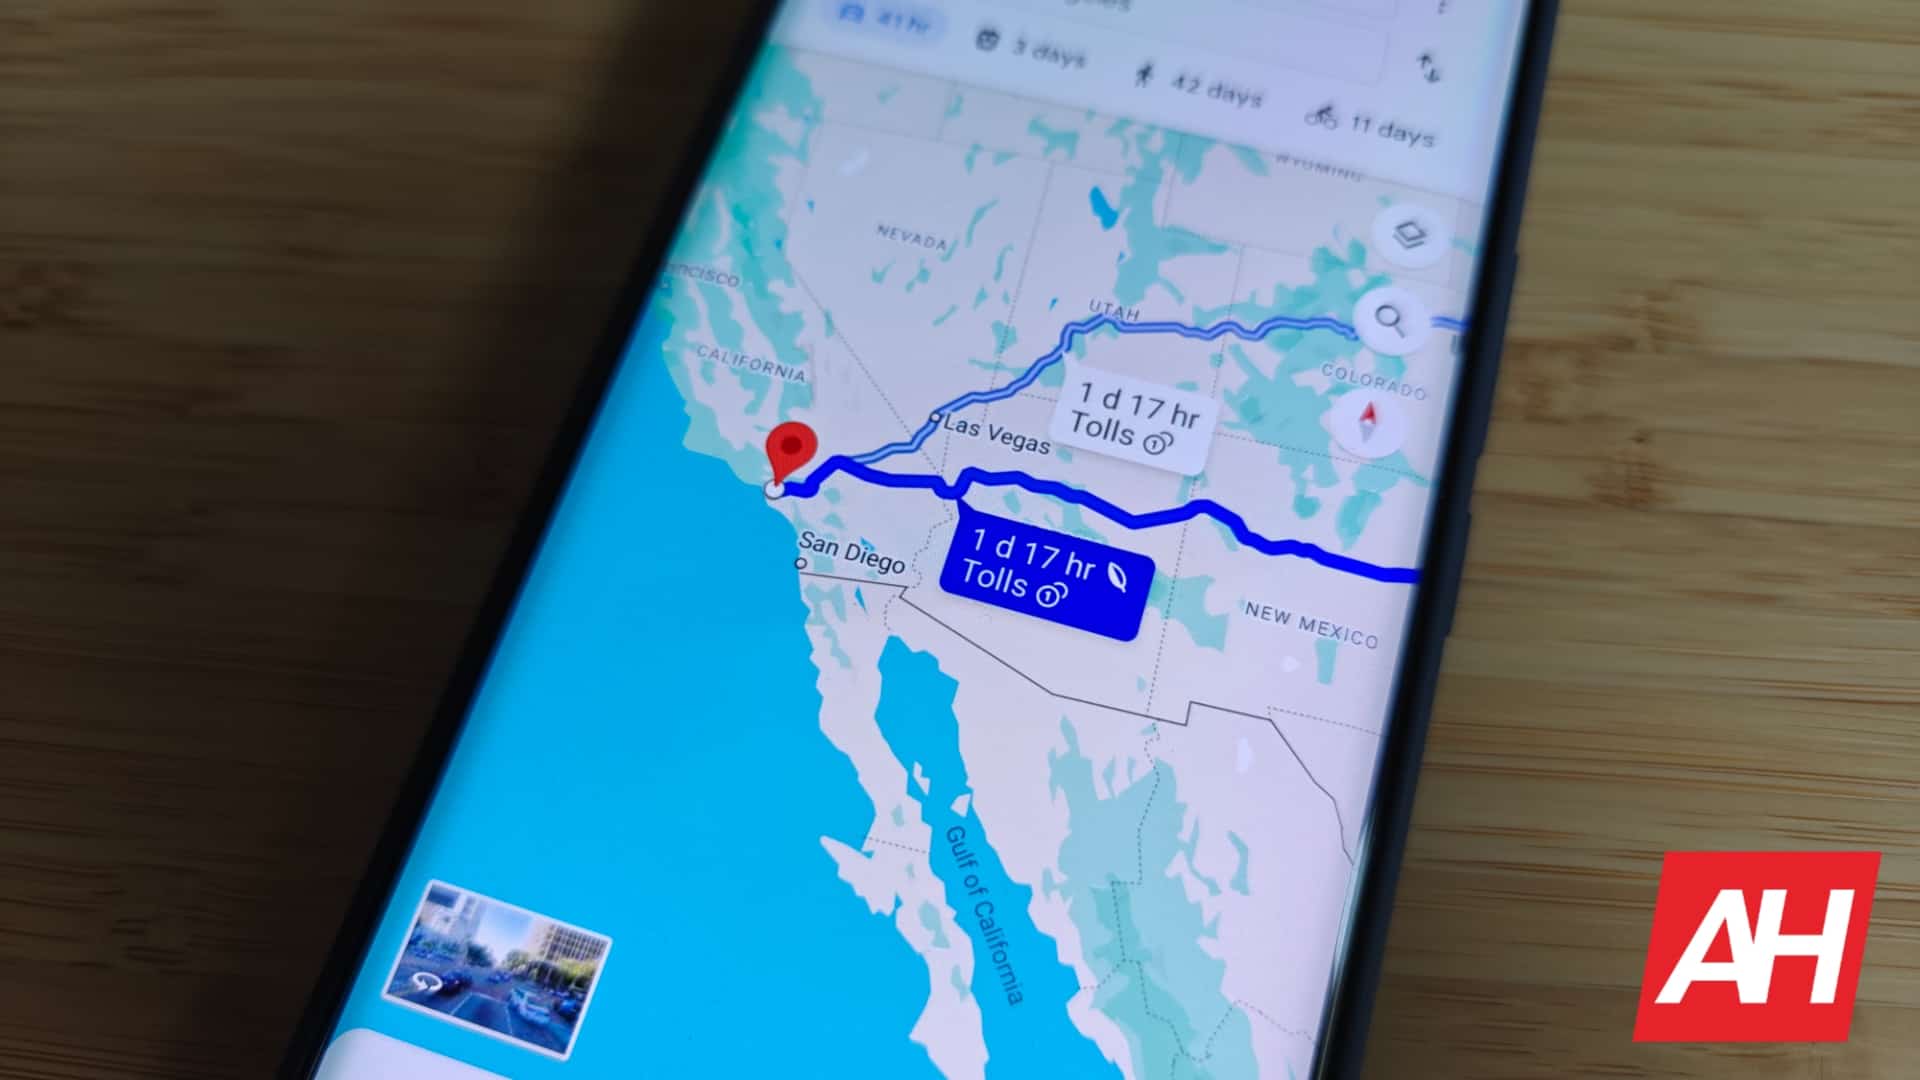 La dirección de Géminis solicita automatizar la navegación con Google Maps